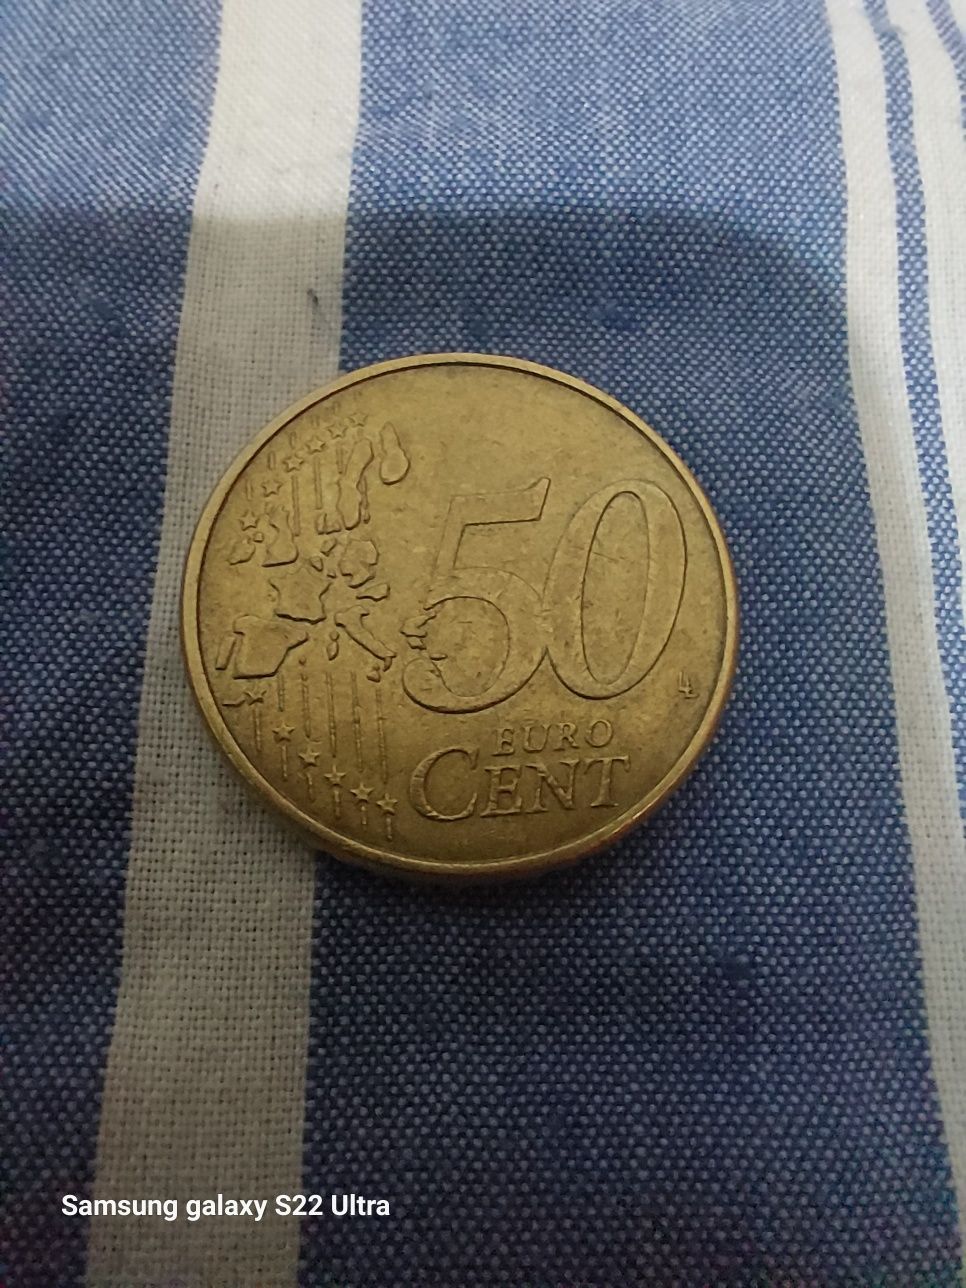 Vand moneda 50 euro cent 2002